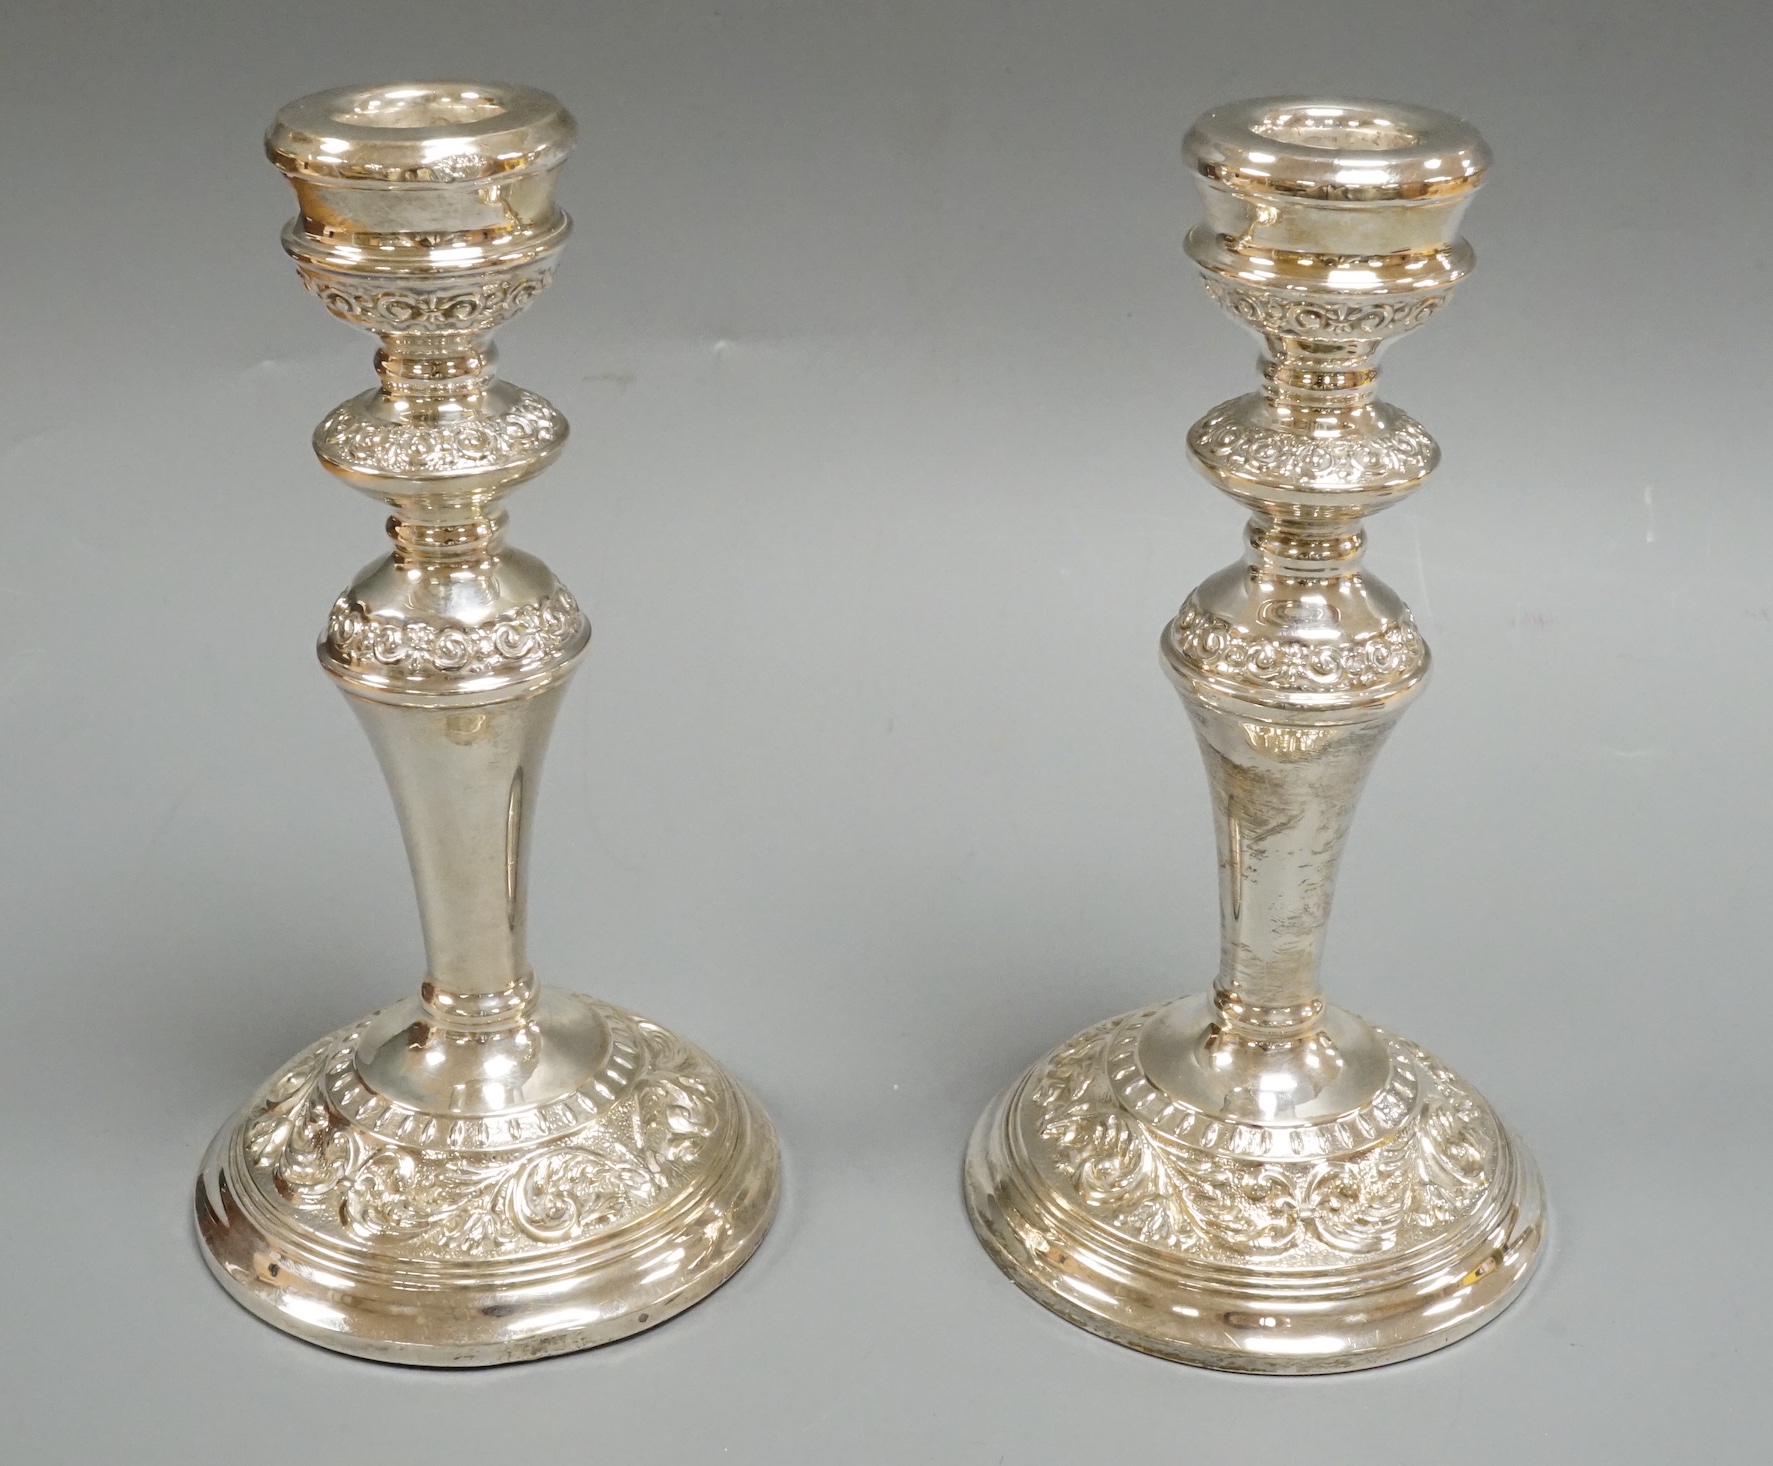 A pair of Elizabeth II silver mounted candlesticks, W.I. Broadway & Co, Birmingham, 1965/66, height 18.9cm.